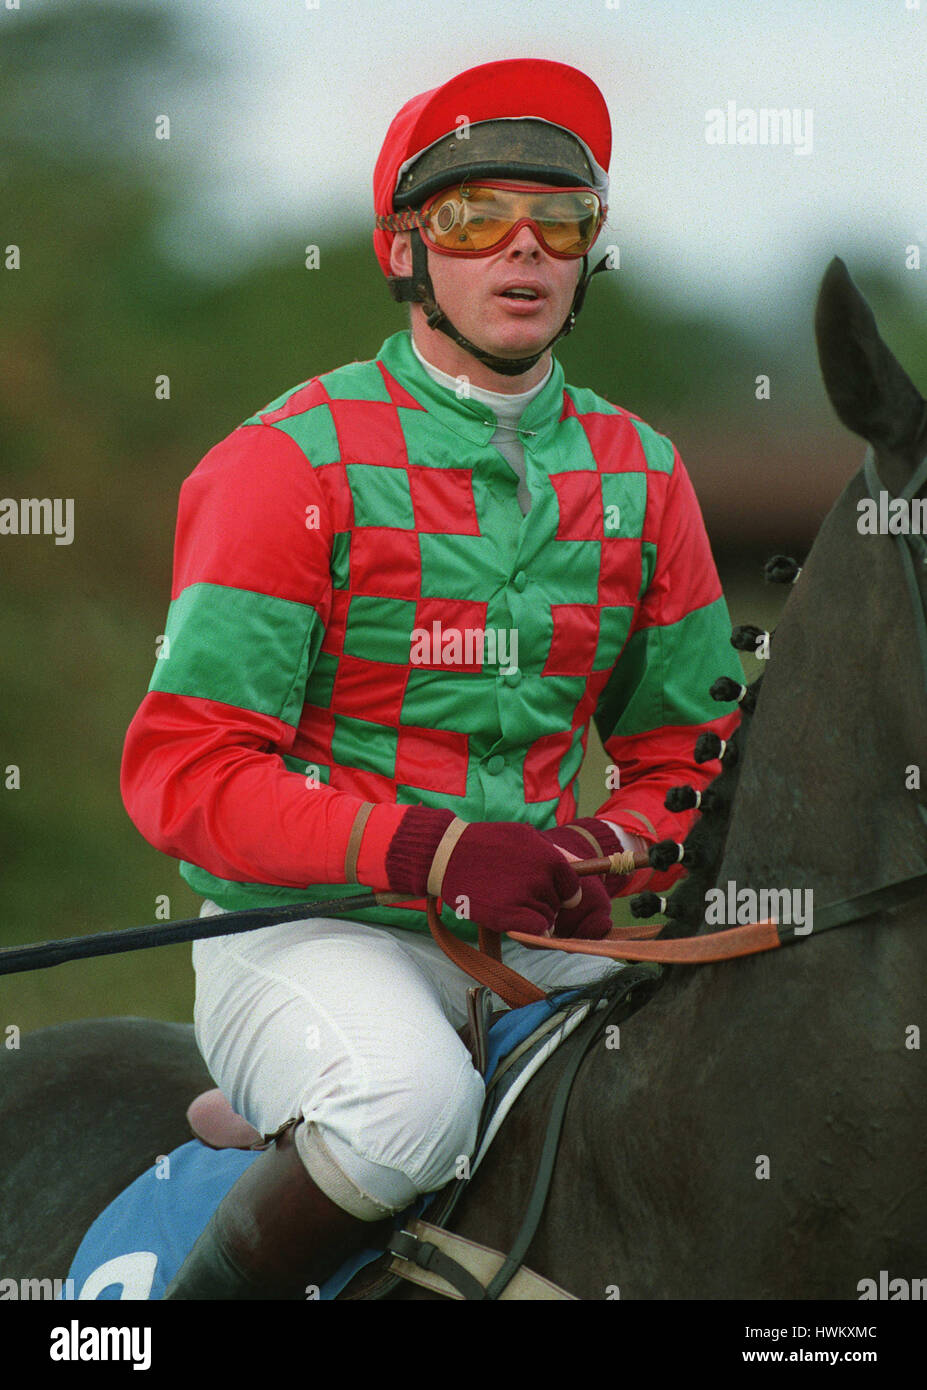 MICKY HAMMOND RACE HORSE TRAINER 03 November 1994 Stock Photo - Alamy